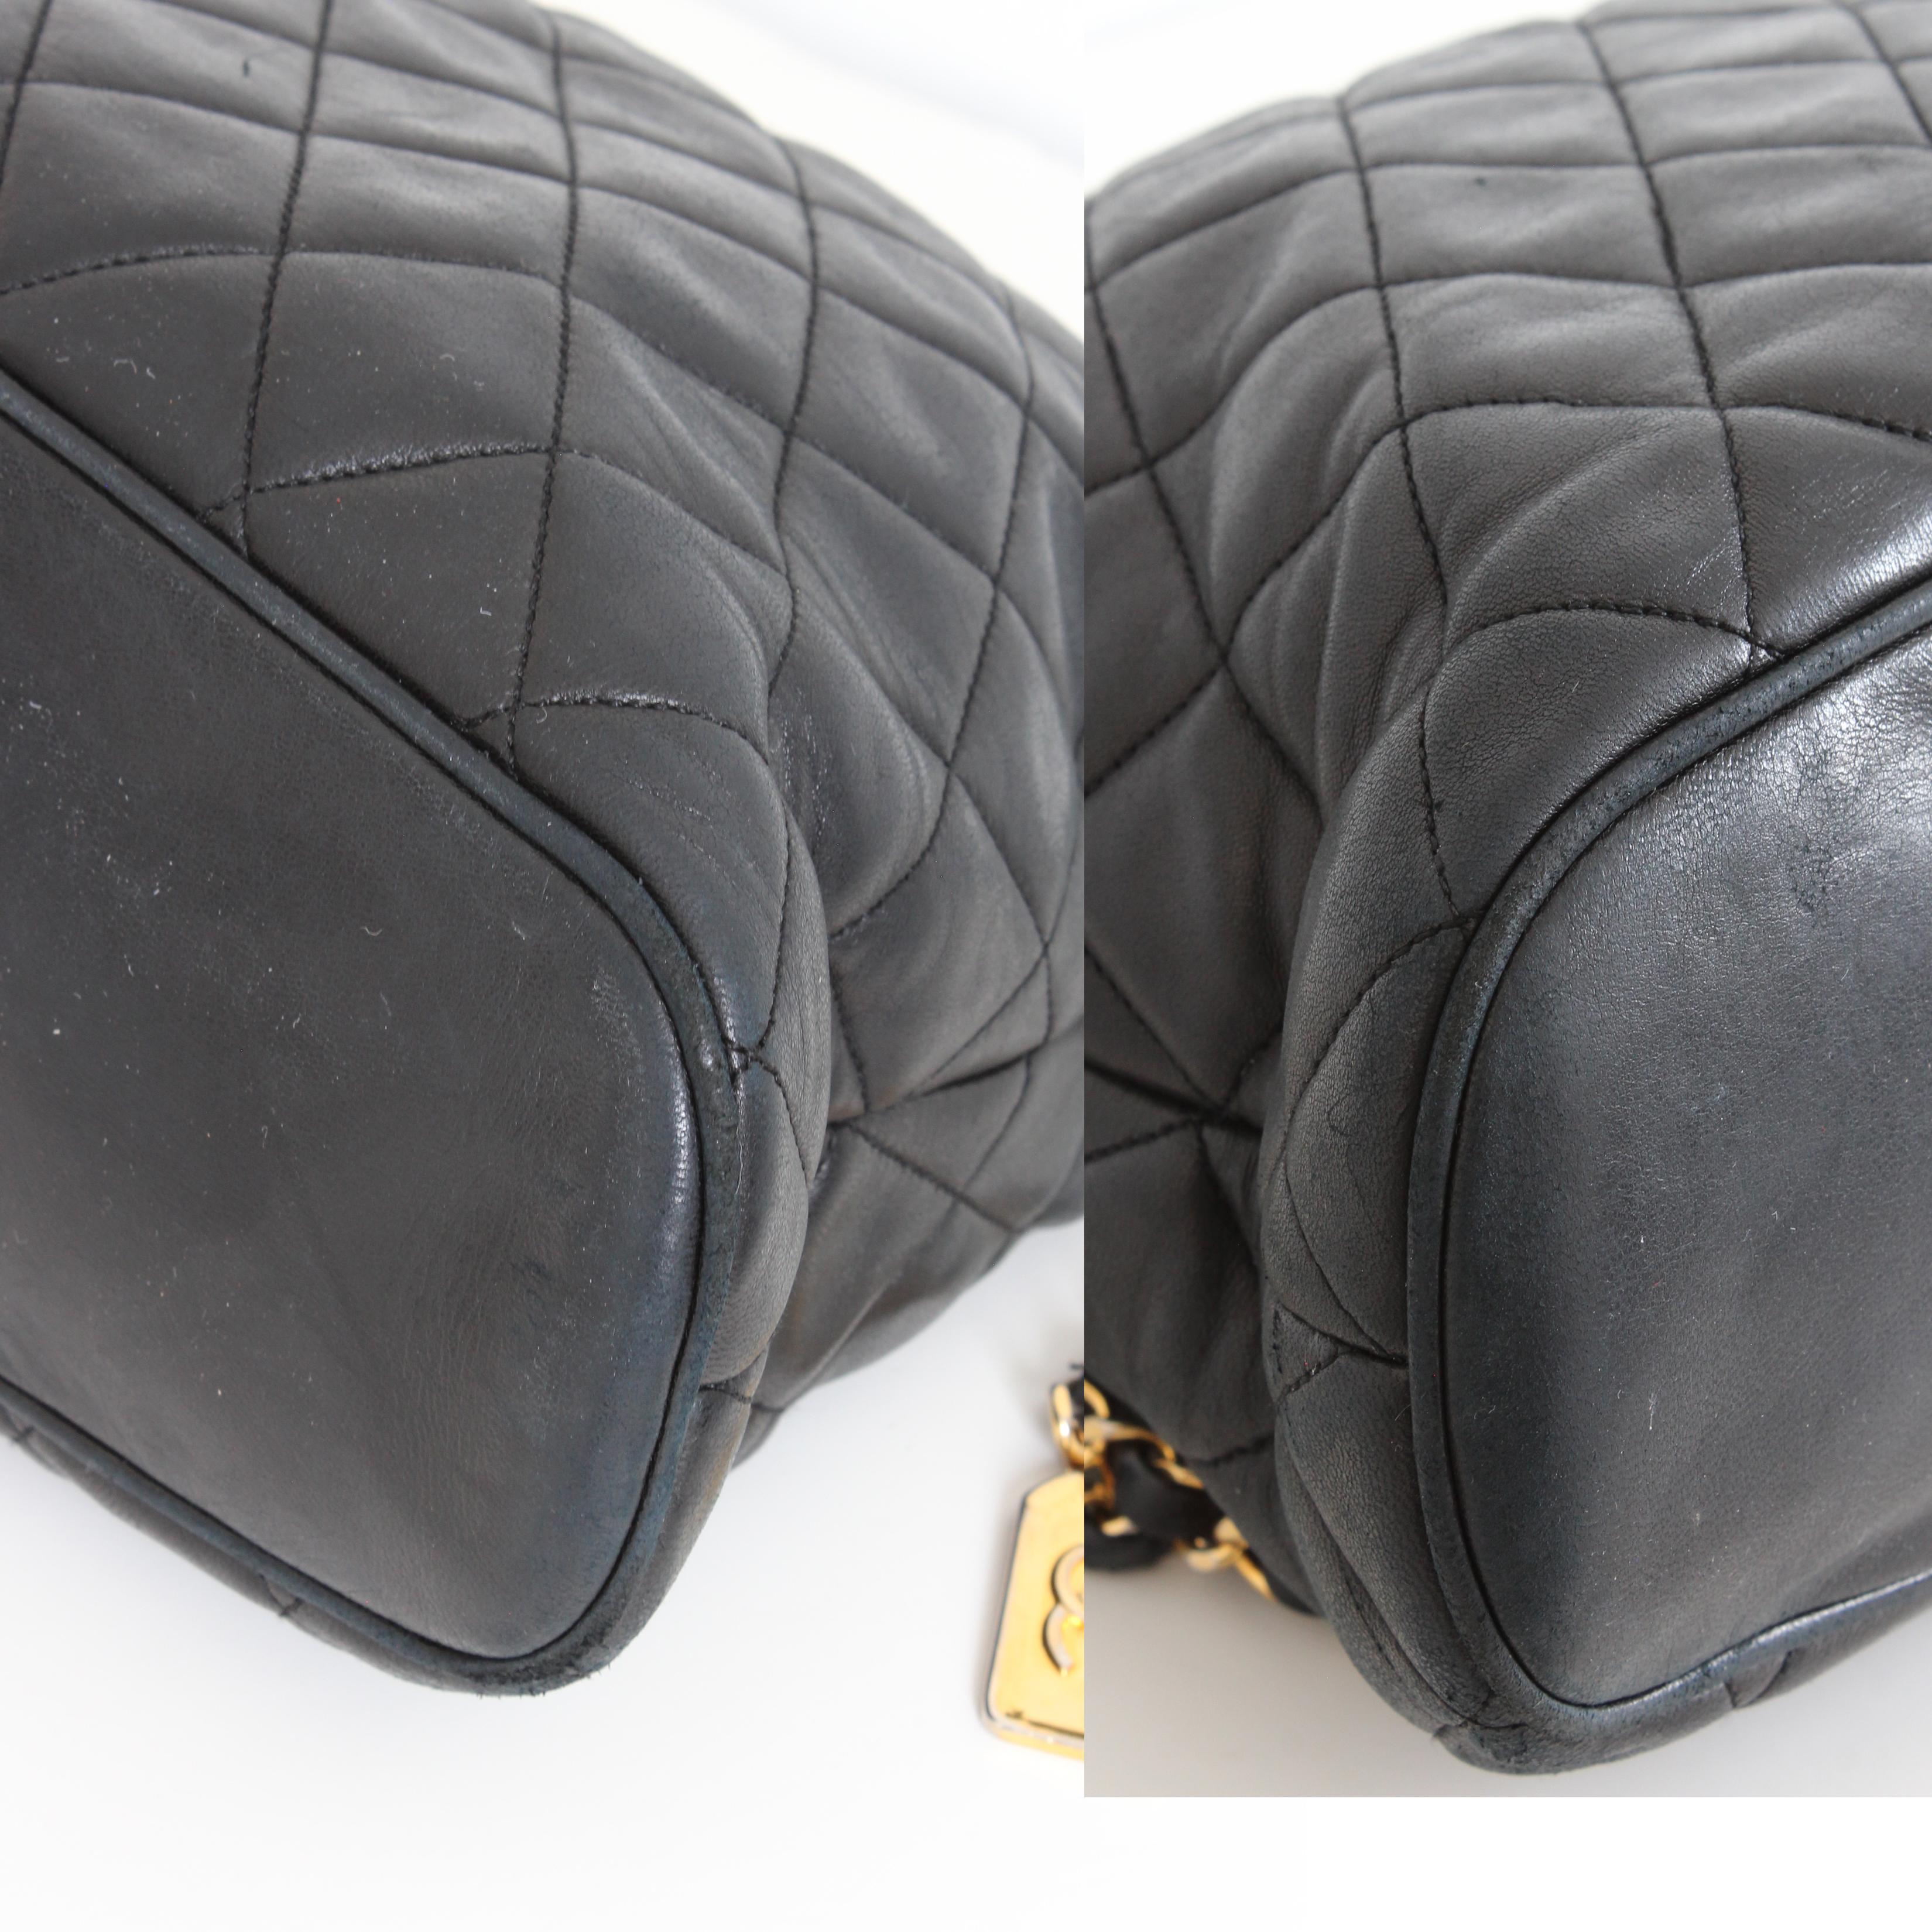 Iconic Chanel Shoulder Bag Lambskin Matelasse Leather Chain Straps + Dust Bag 3